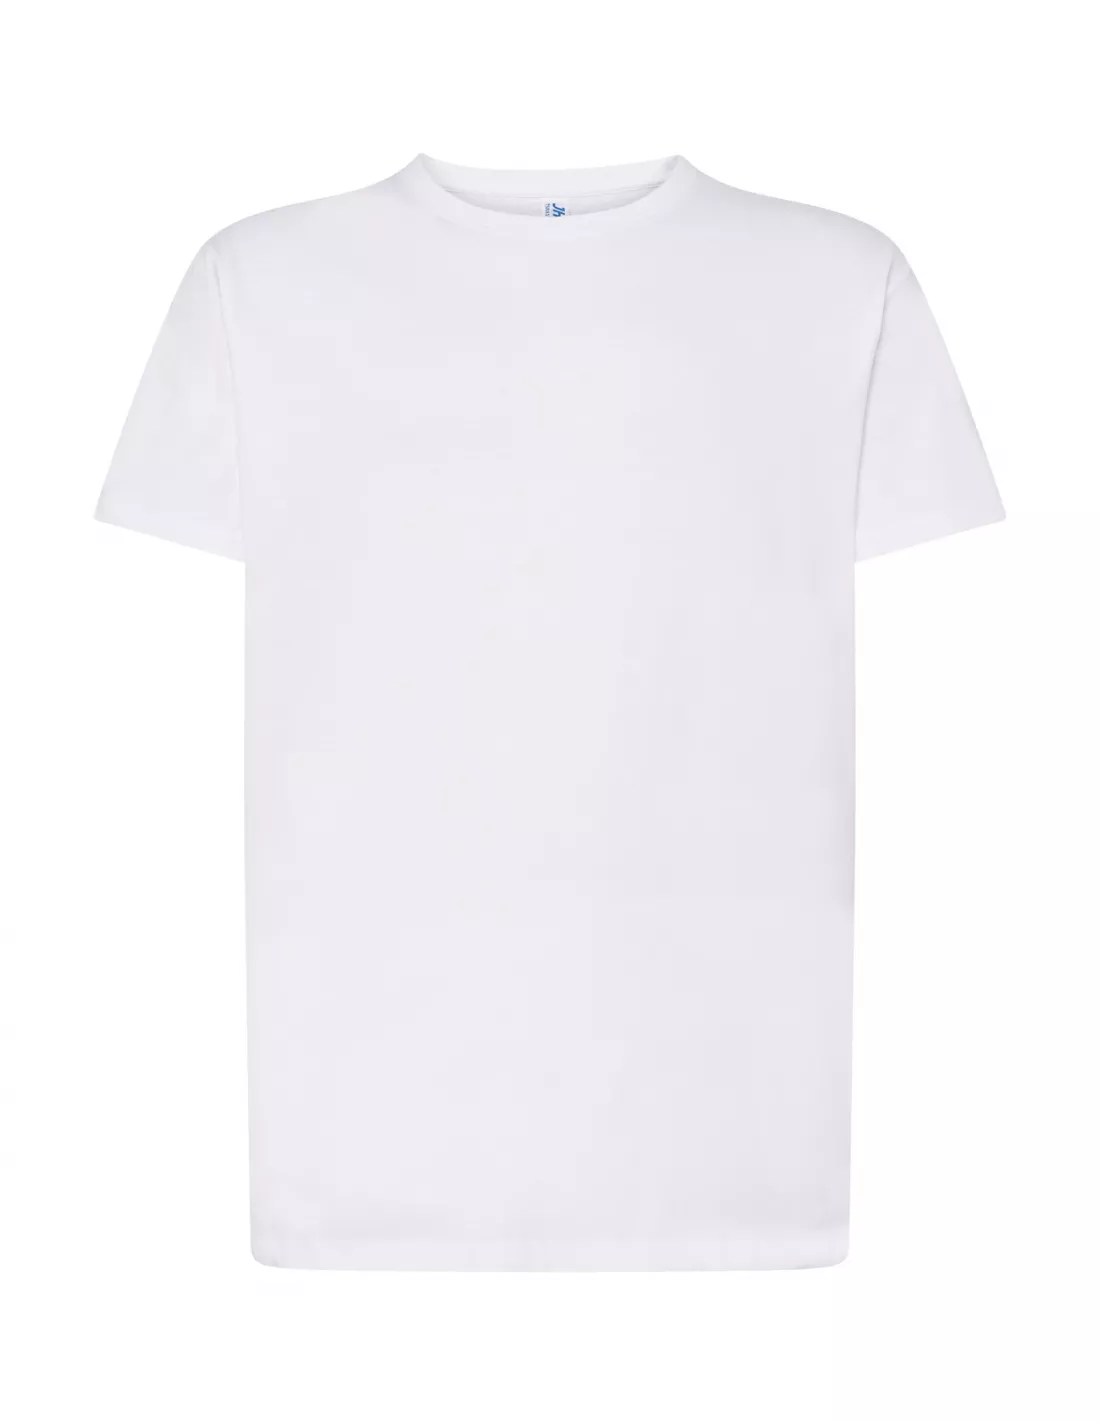 Camiseta oversize | JHK | Al desde 2.20€ + iva